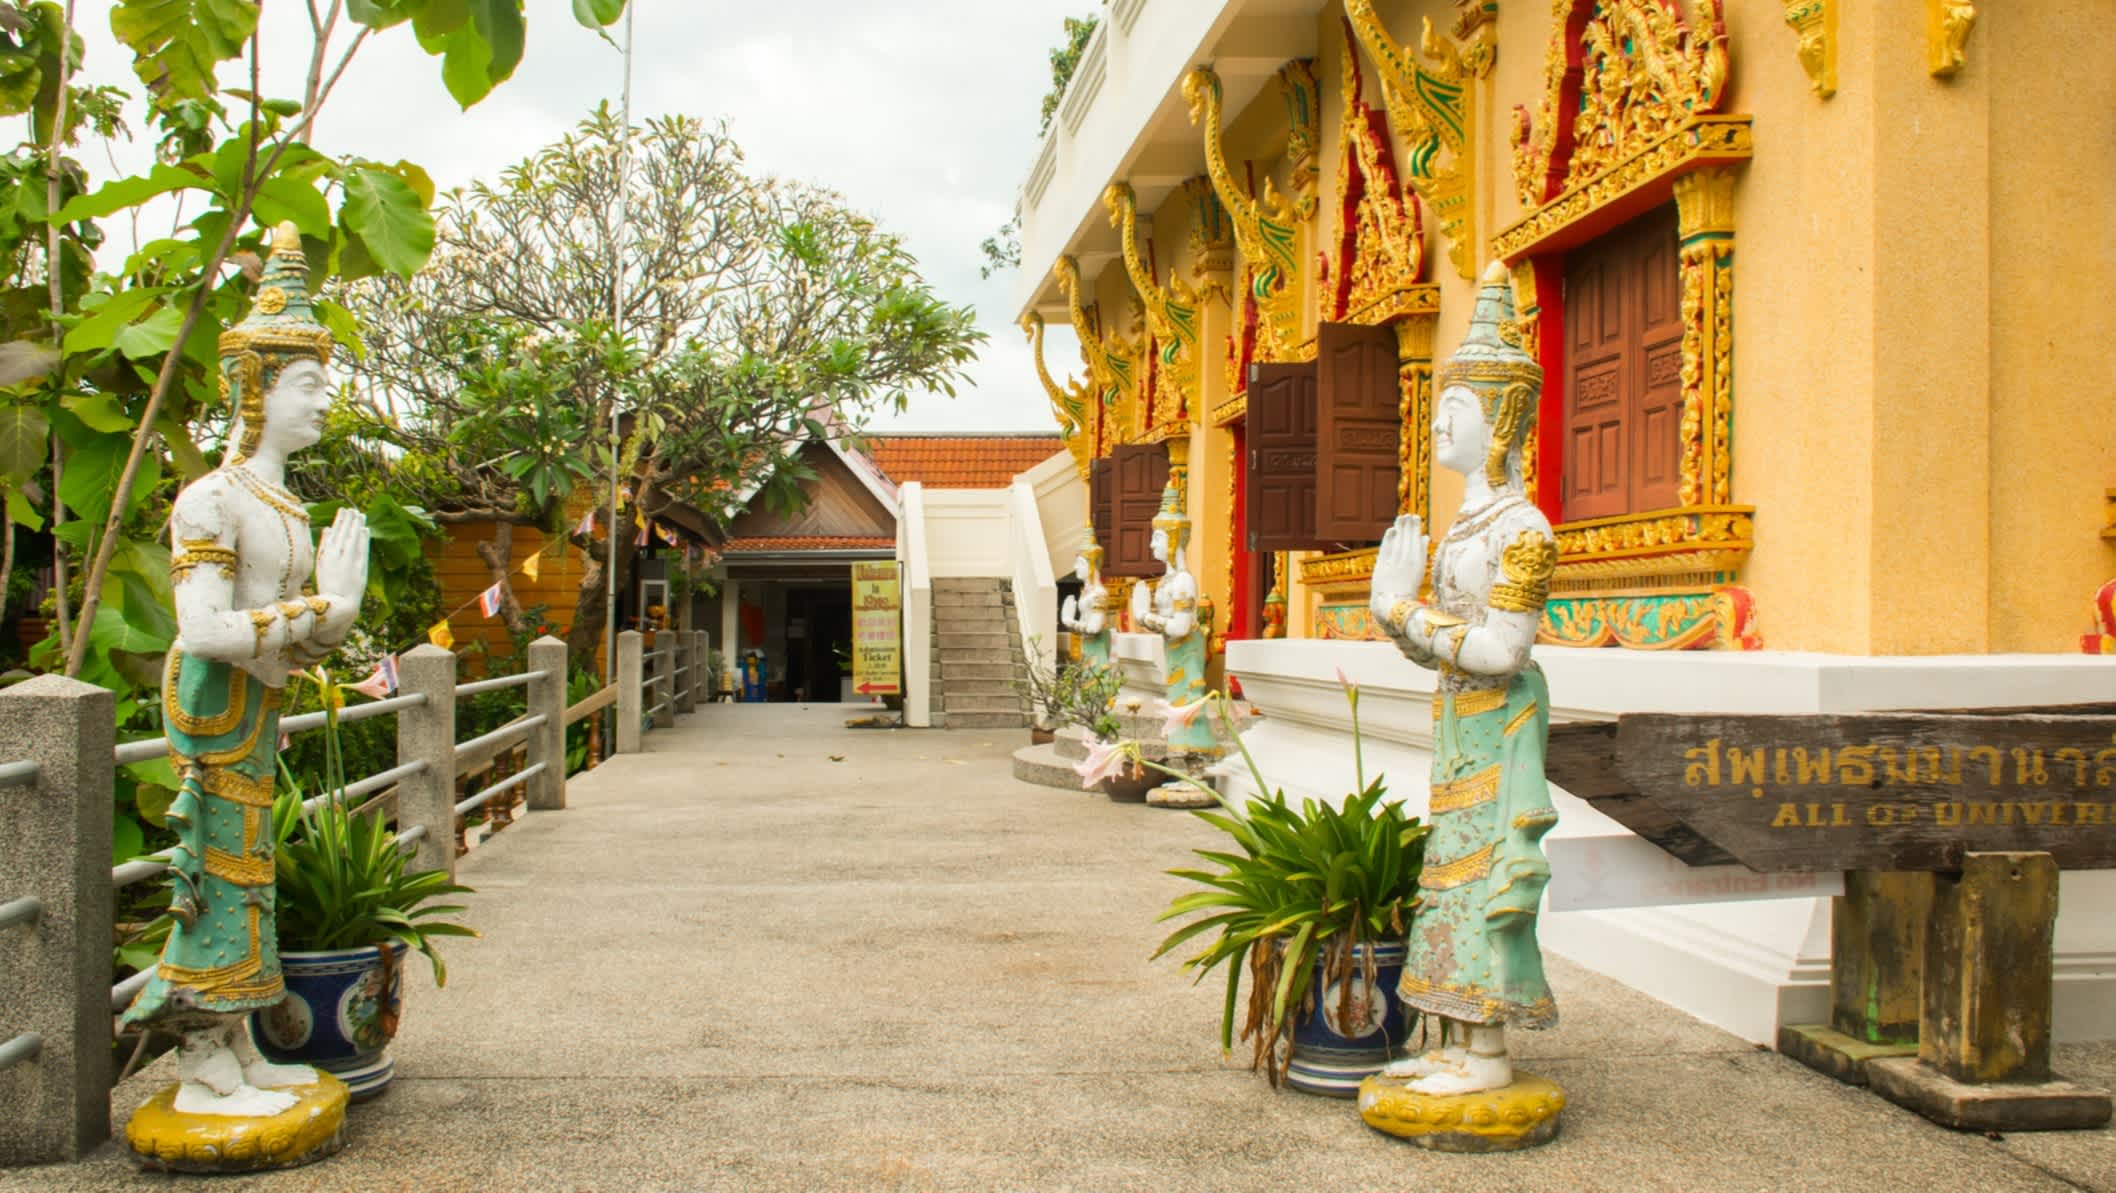 Goldene Pagode des Wat Khao Hua Jook auf dem Koh Samui in Thailand

